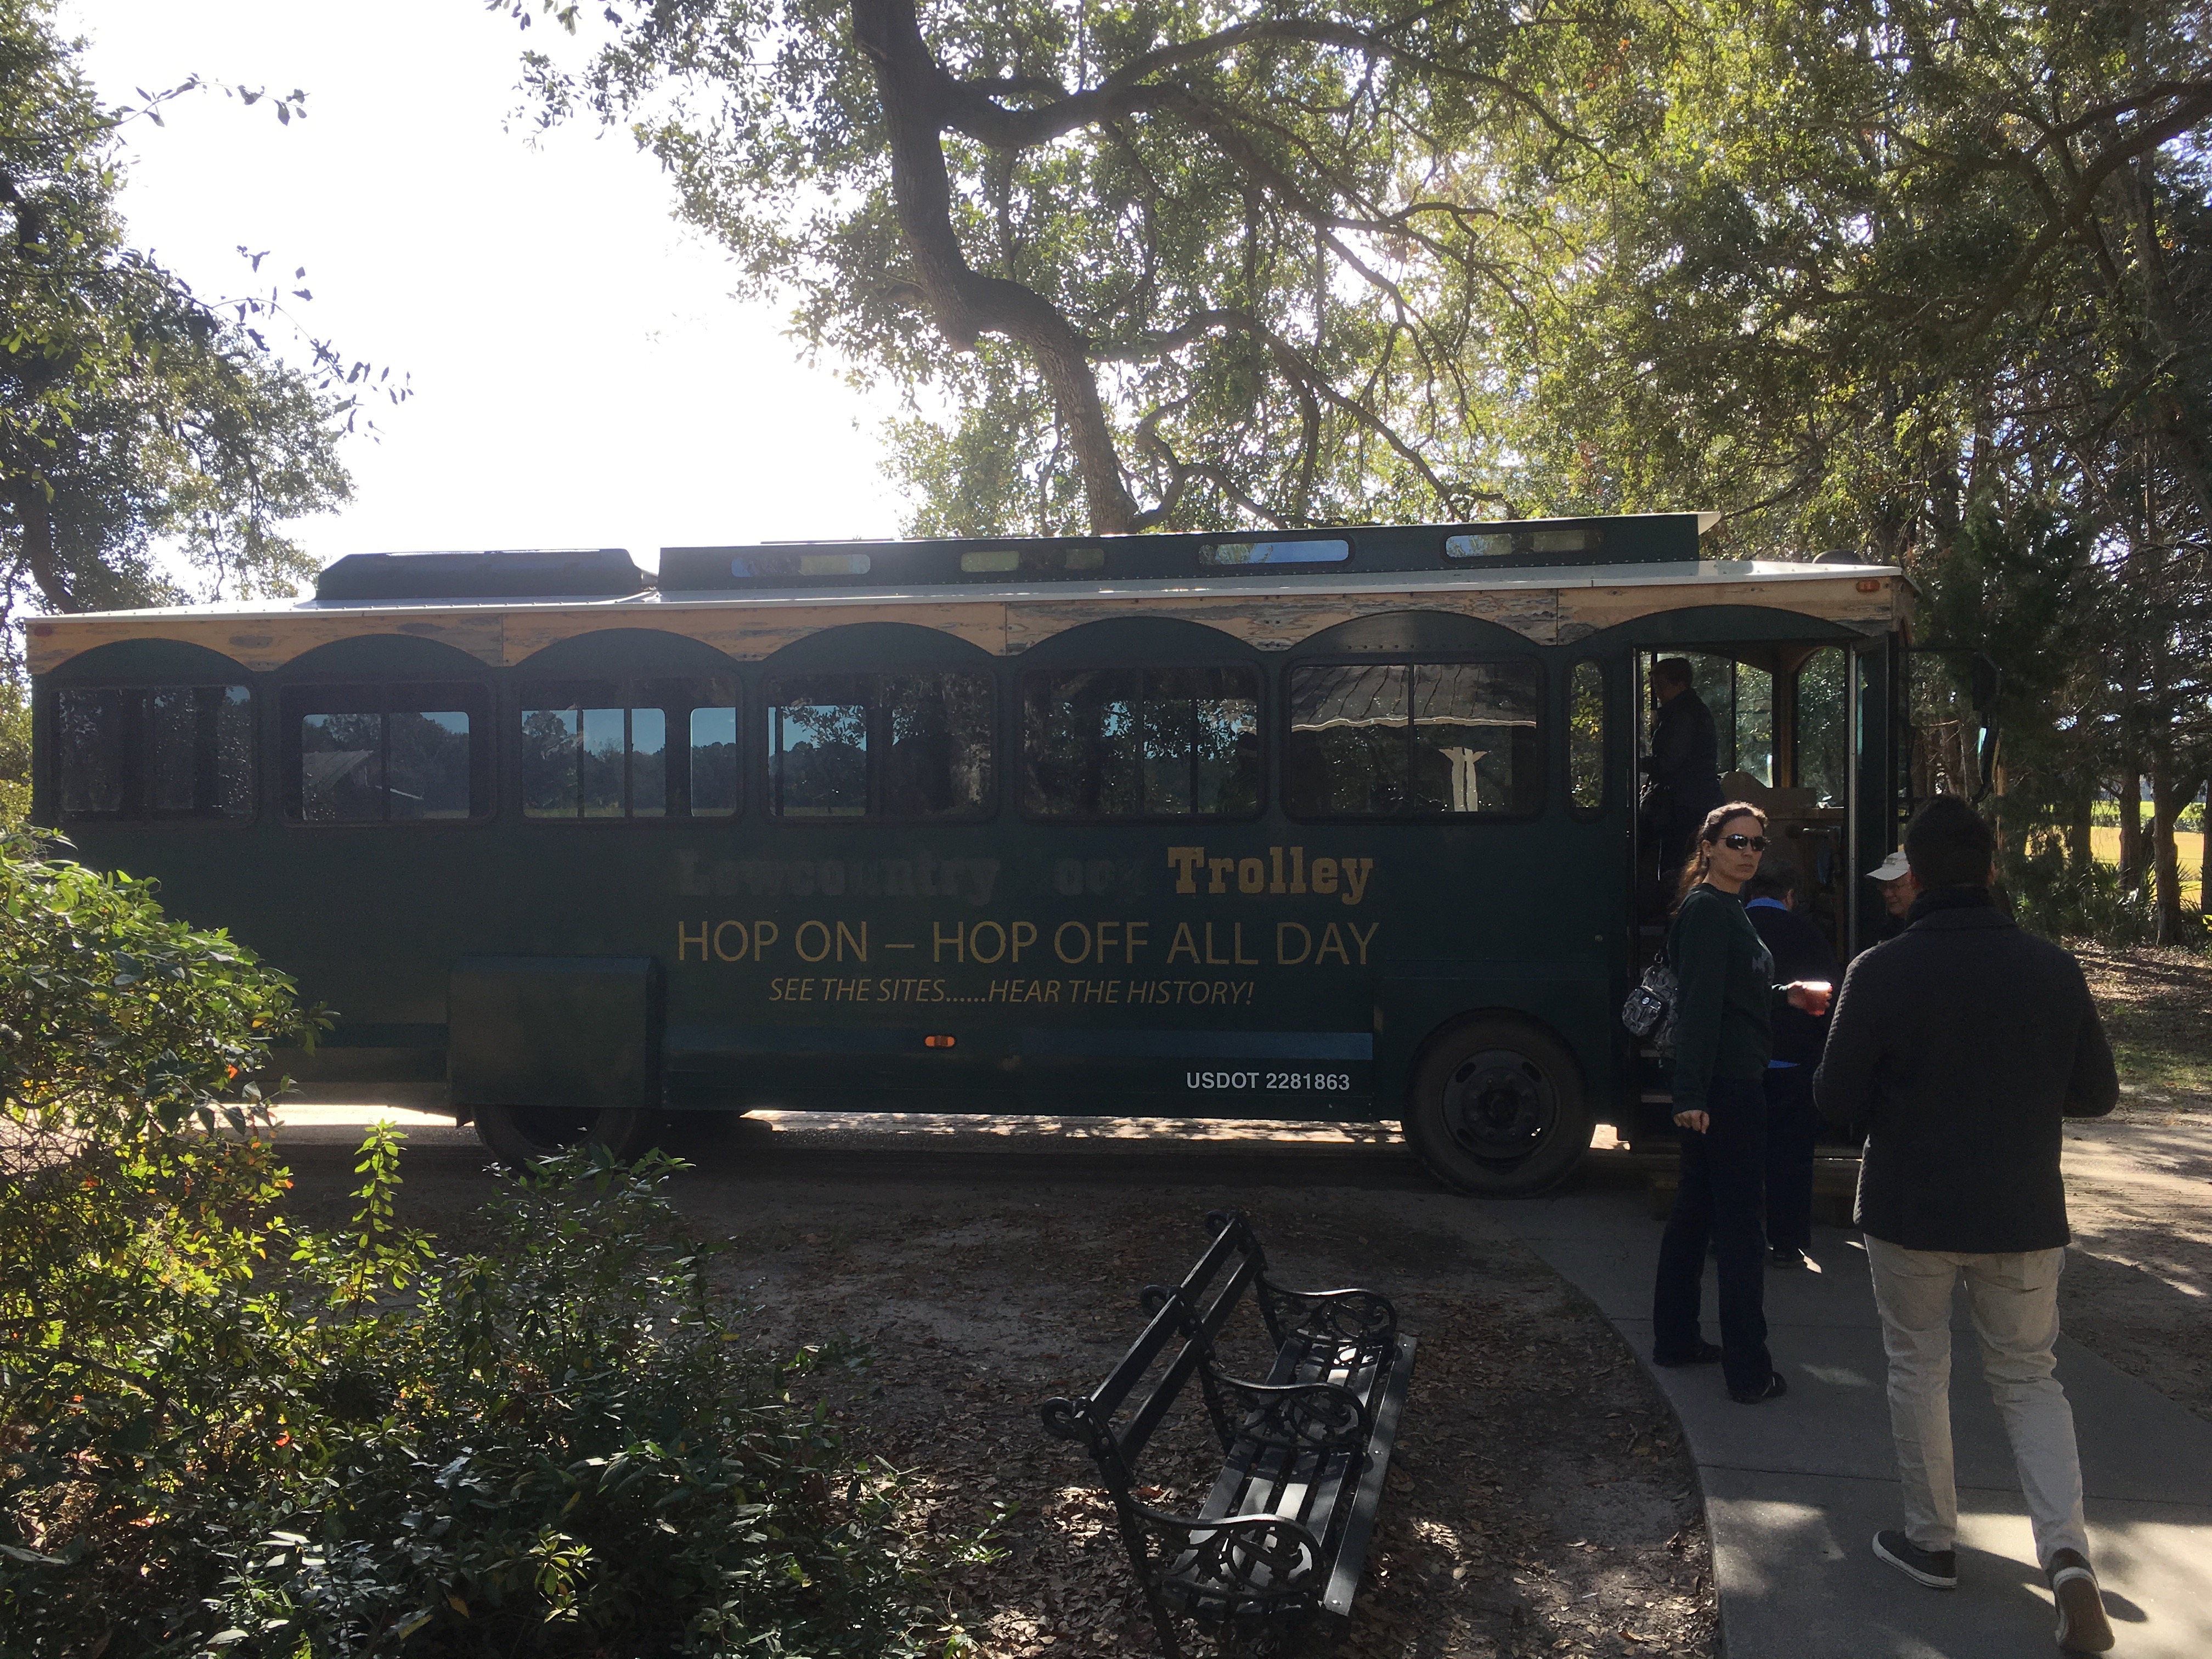 Charleston Tea Plantation trolley